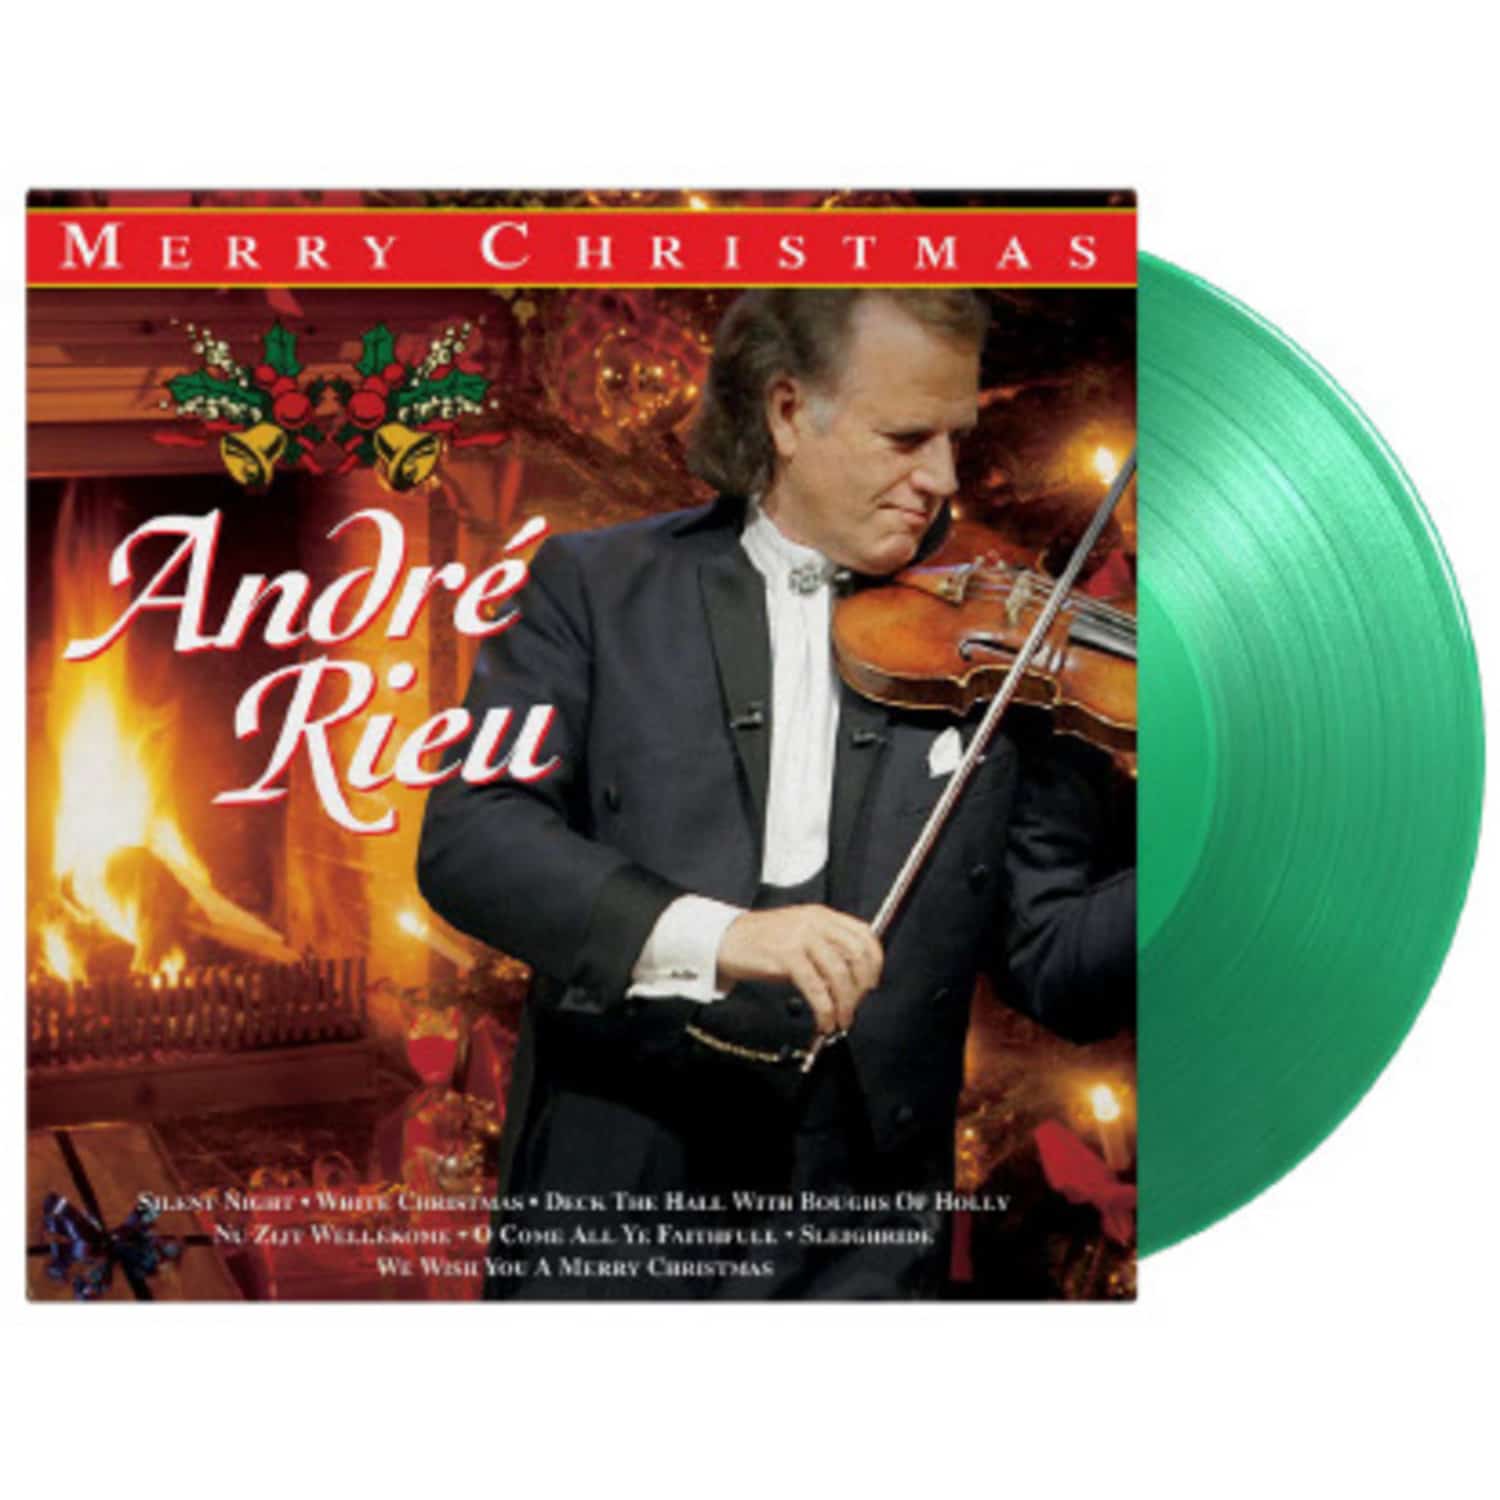 Andre Rieu - MERRY CHRISTMAS 